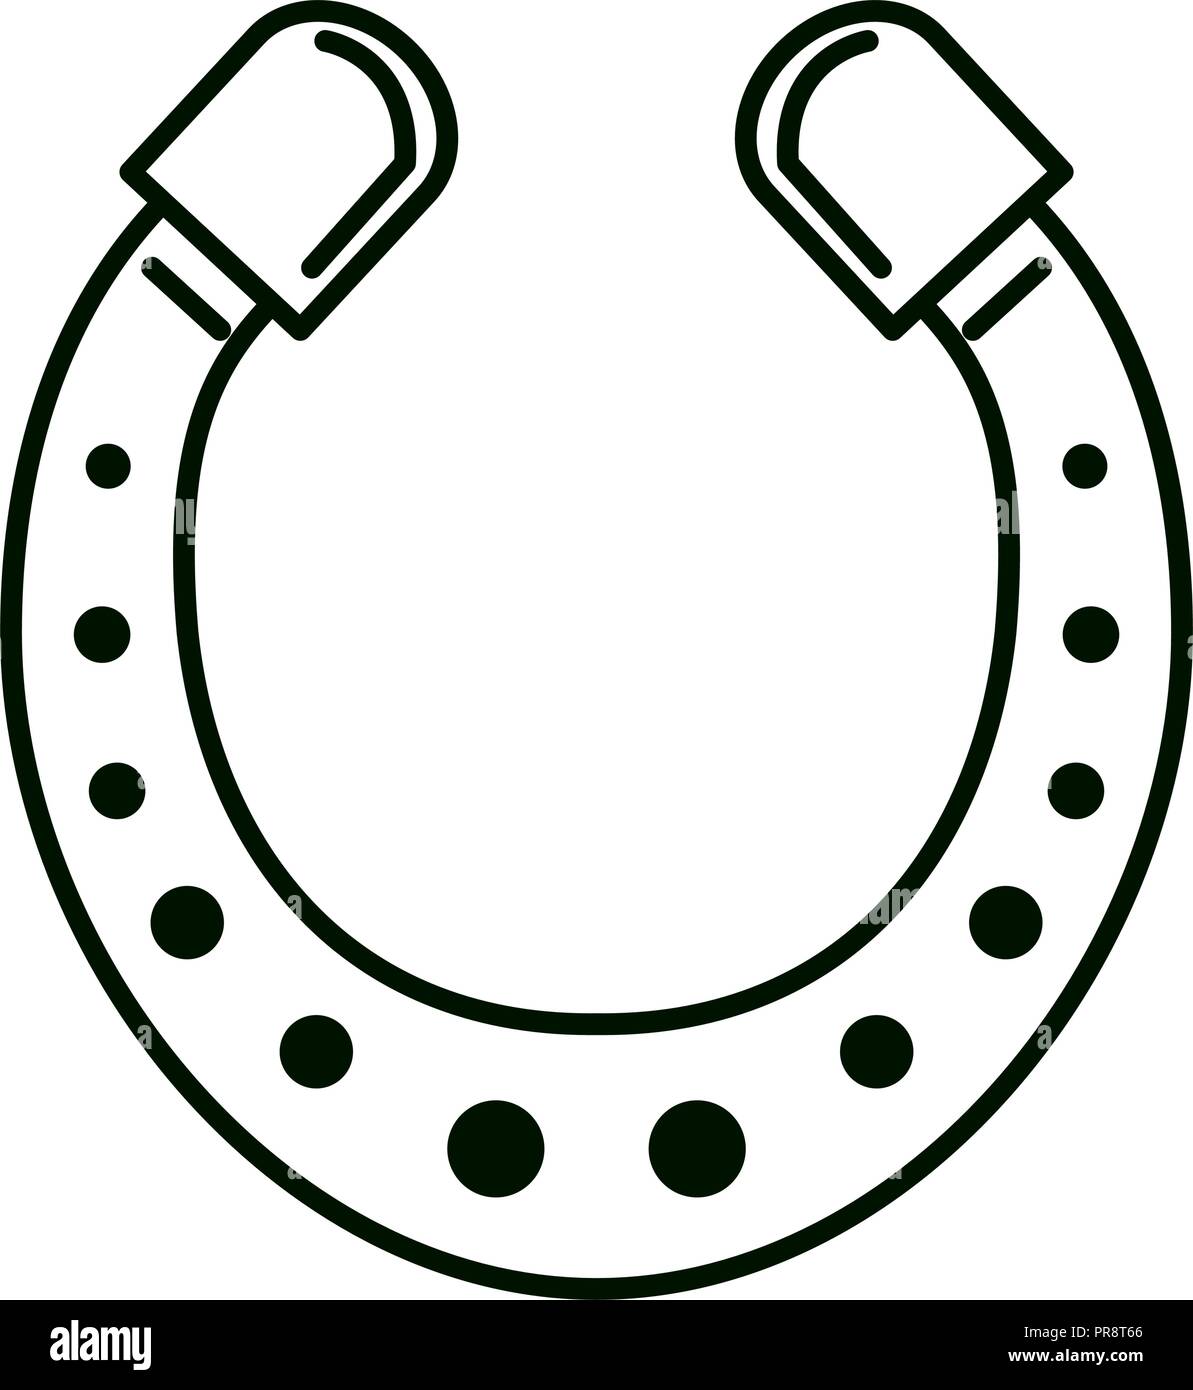 Horseshoe irish lucky symbol Stock Vector